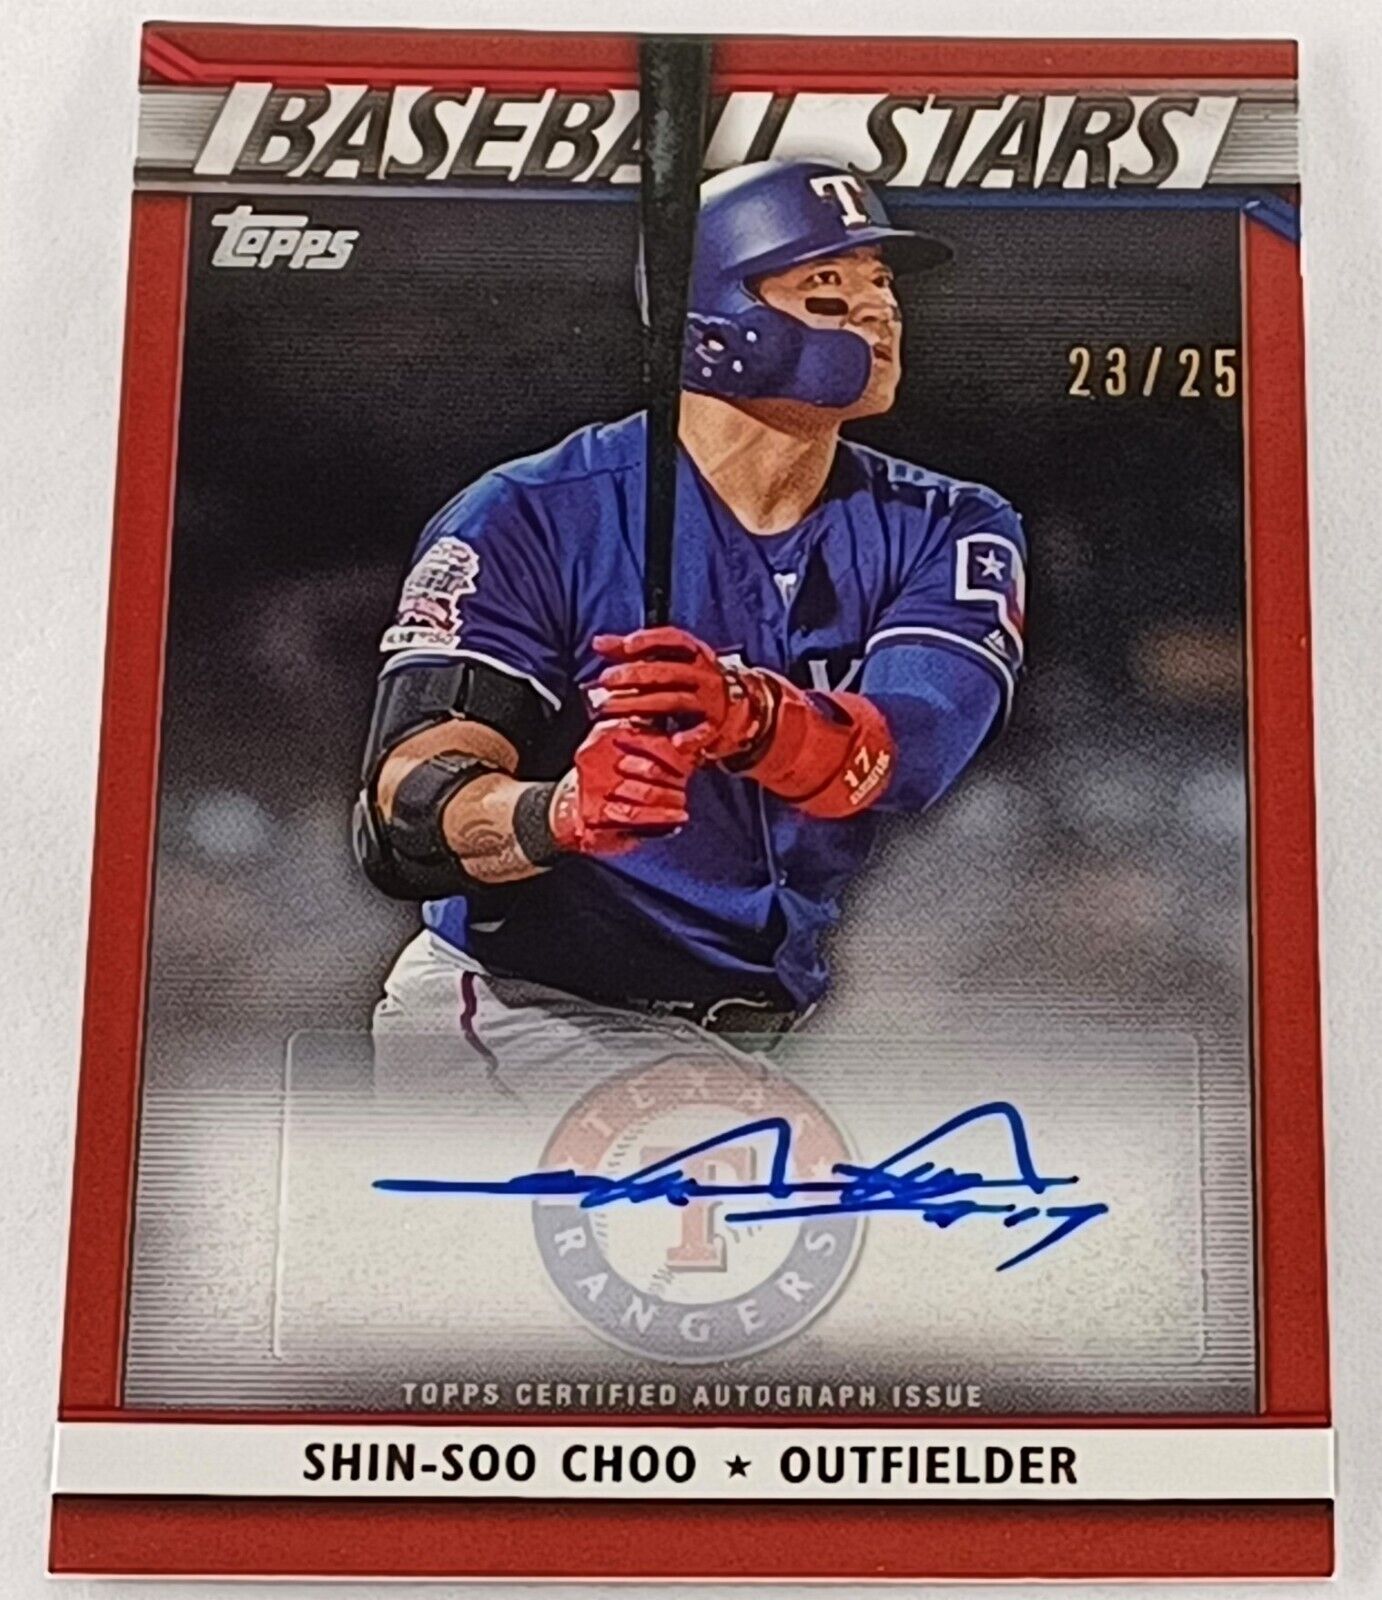 2020 Topps Shin-Soo Choo Auto /25 Baseball Stars Red Autograph Texas Rangers